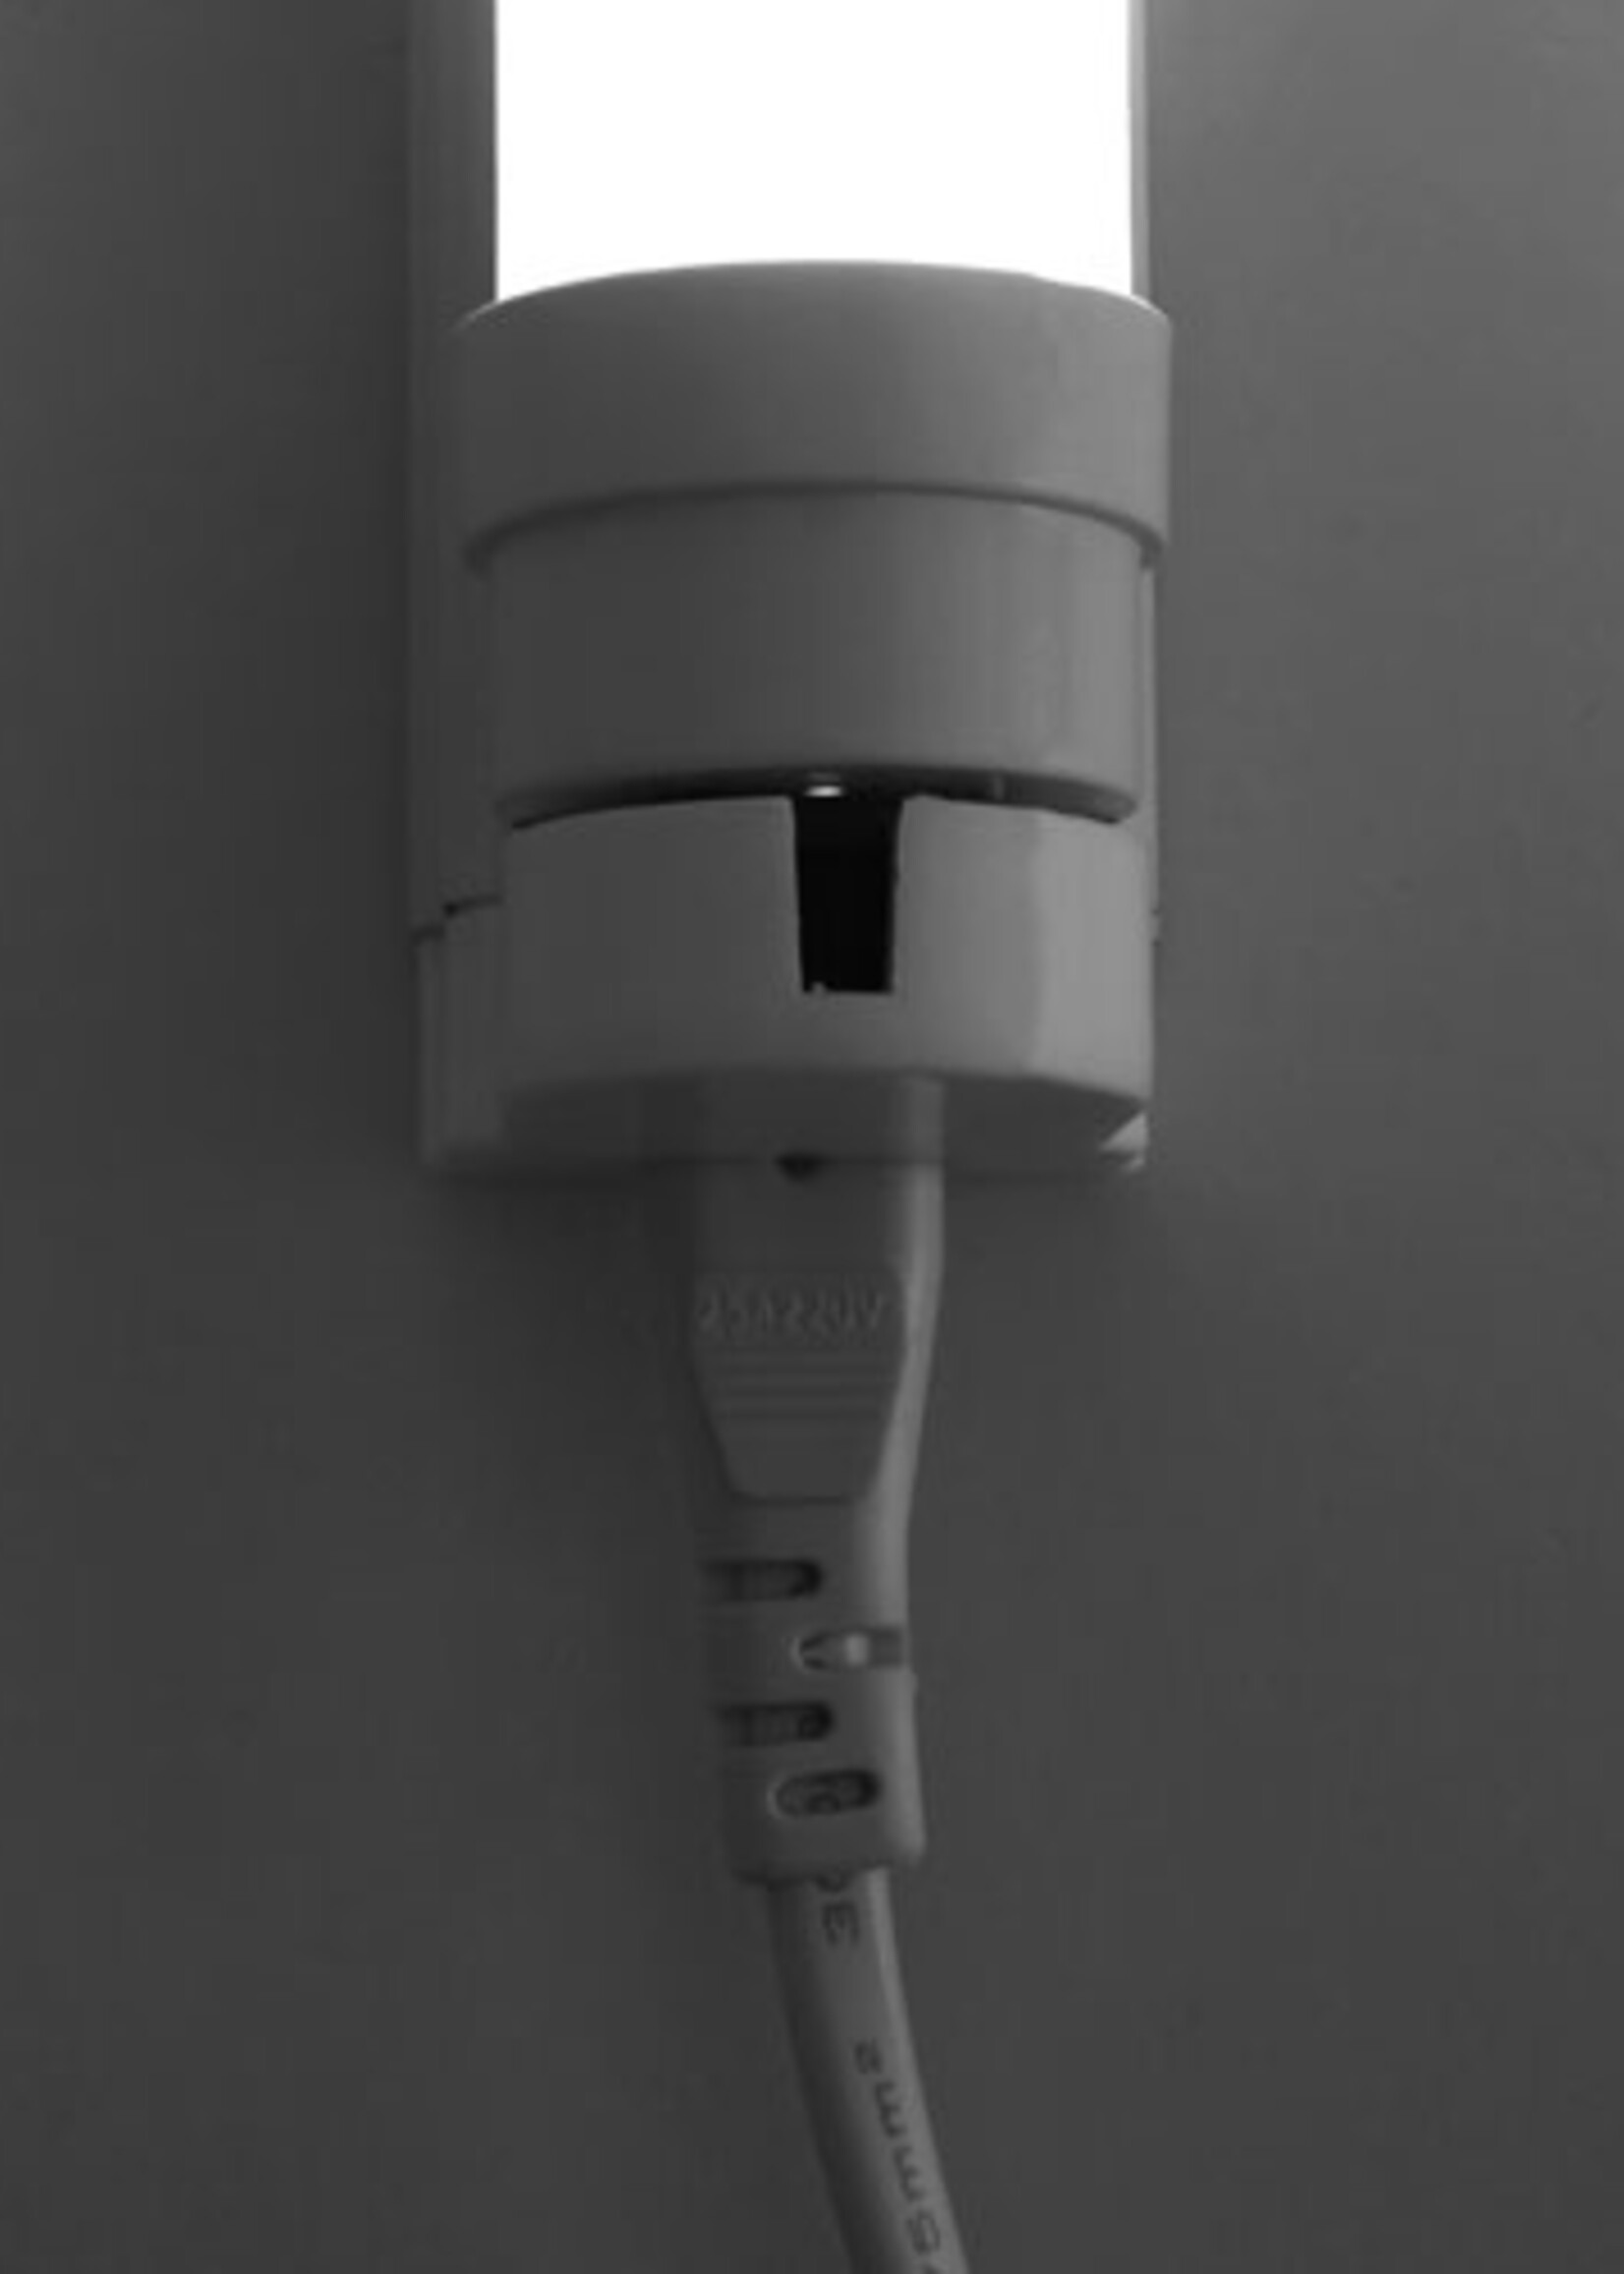 LEDWINKEL-Online LED Tube Light T8 150cm 25W 140lm/W - Pro High lumen